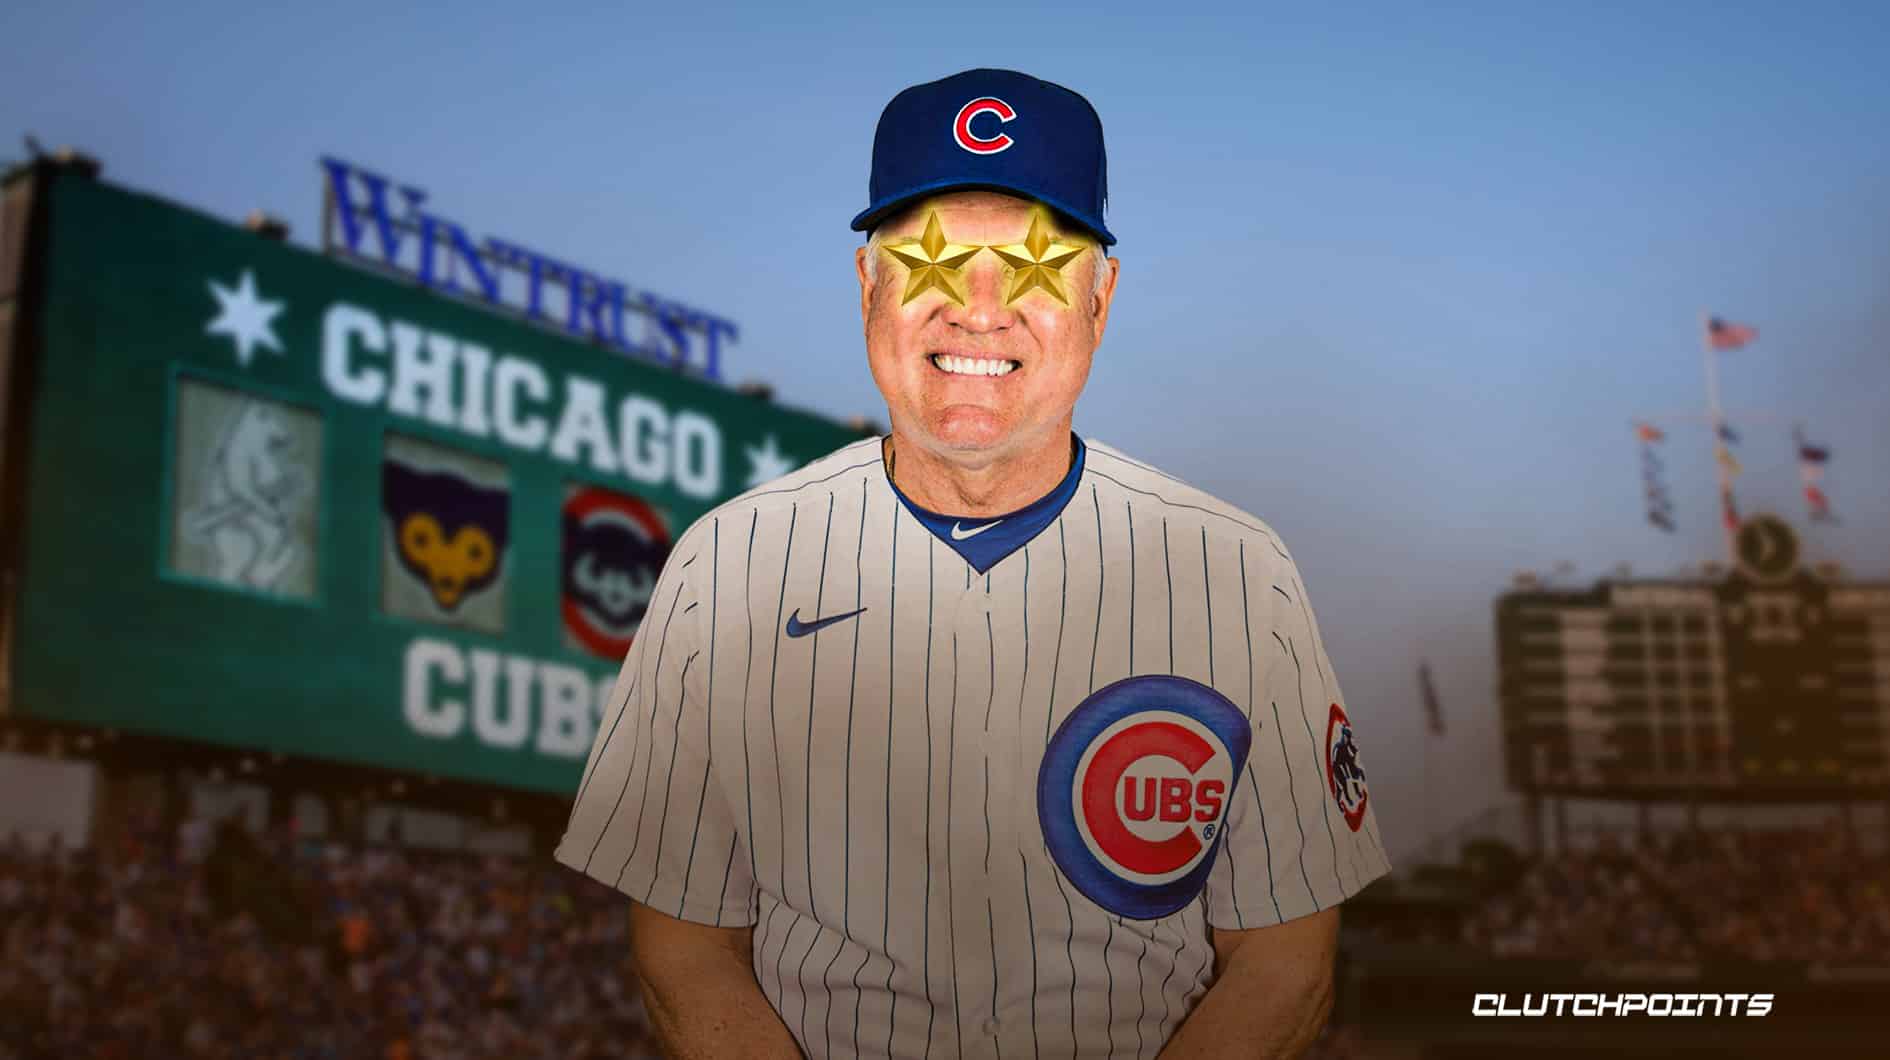 Hall of Famer Ryne Sandberg a candidate for Chicago Cubs job